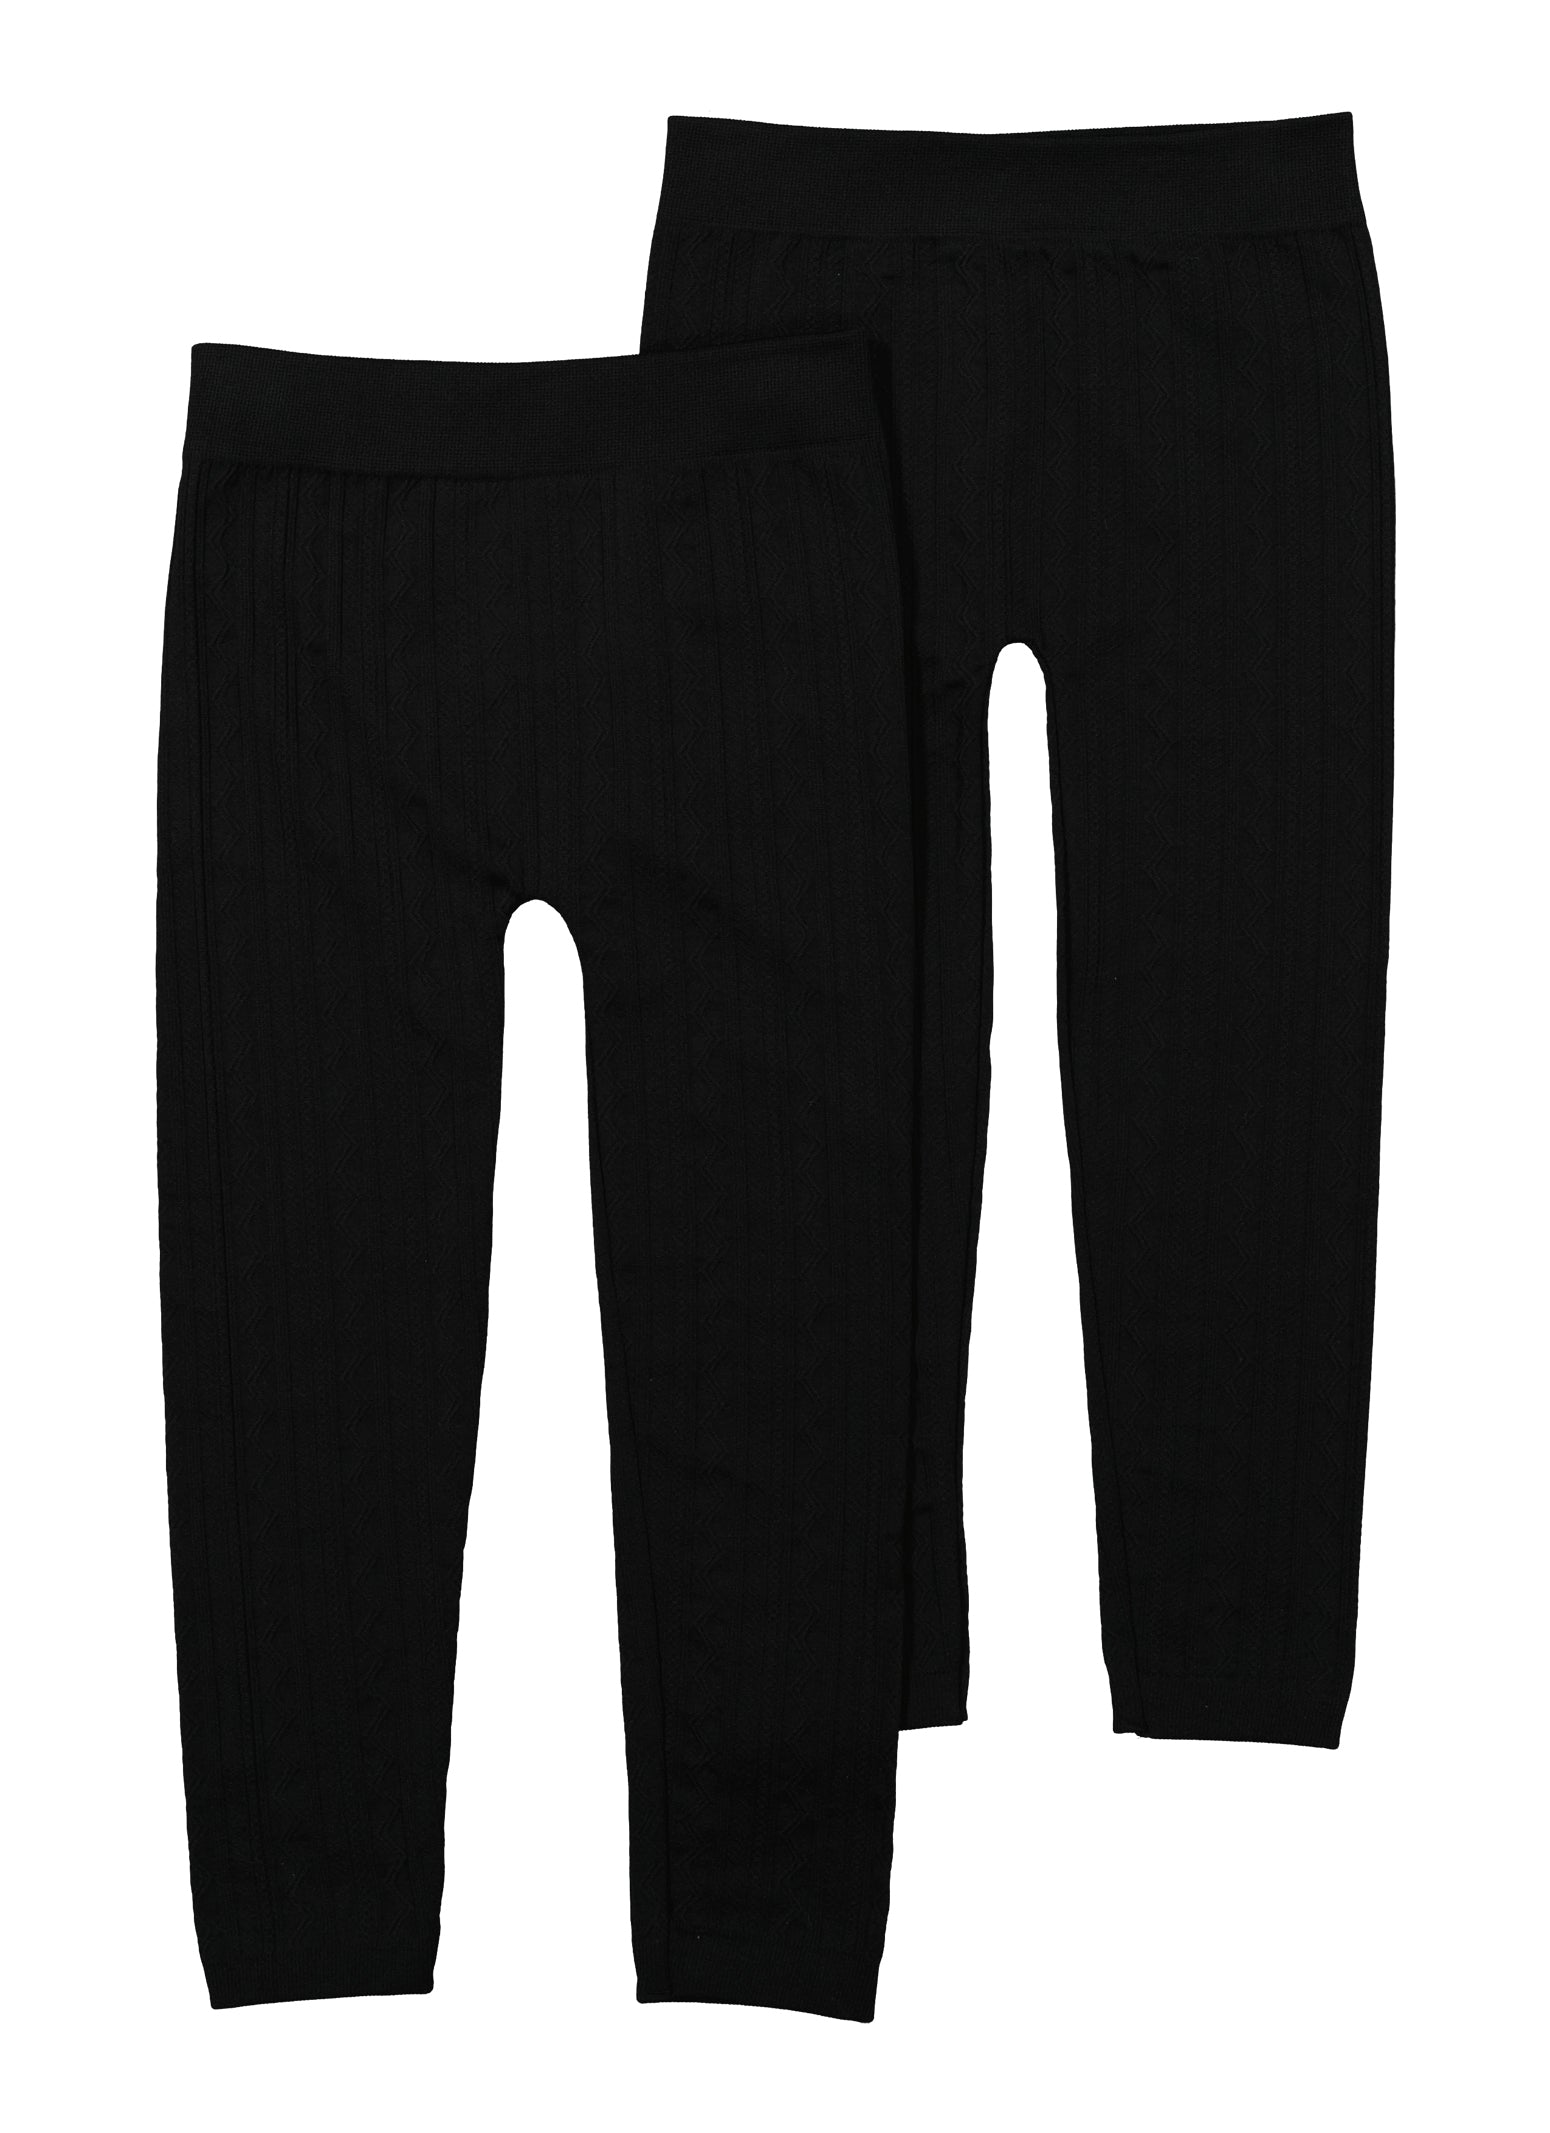 KaLI_store Girls Cargo Pants Girls' Leggings Solid Color Outerwear Girl  Baby Spring Pants Black,9-10 Years 